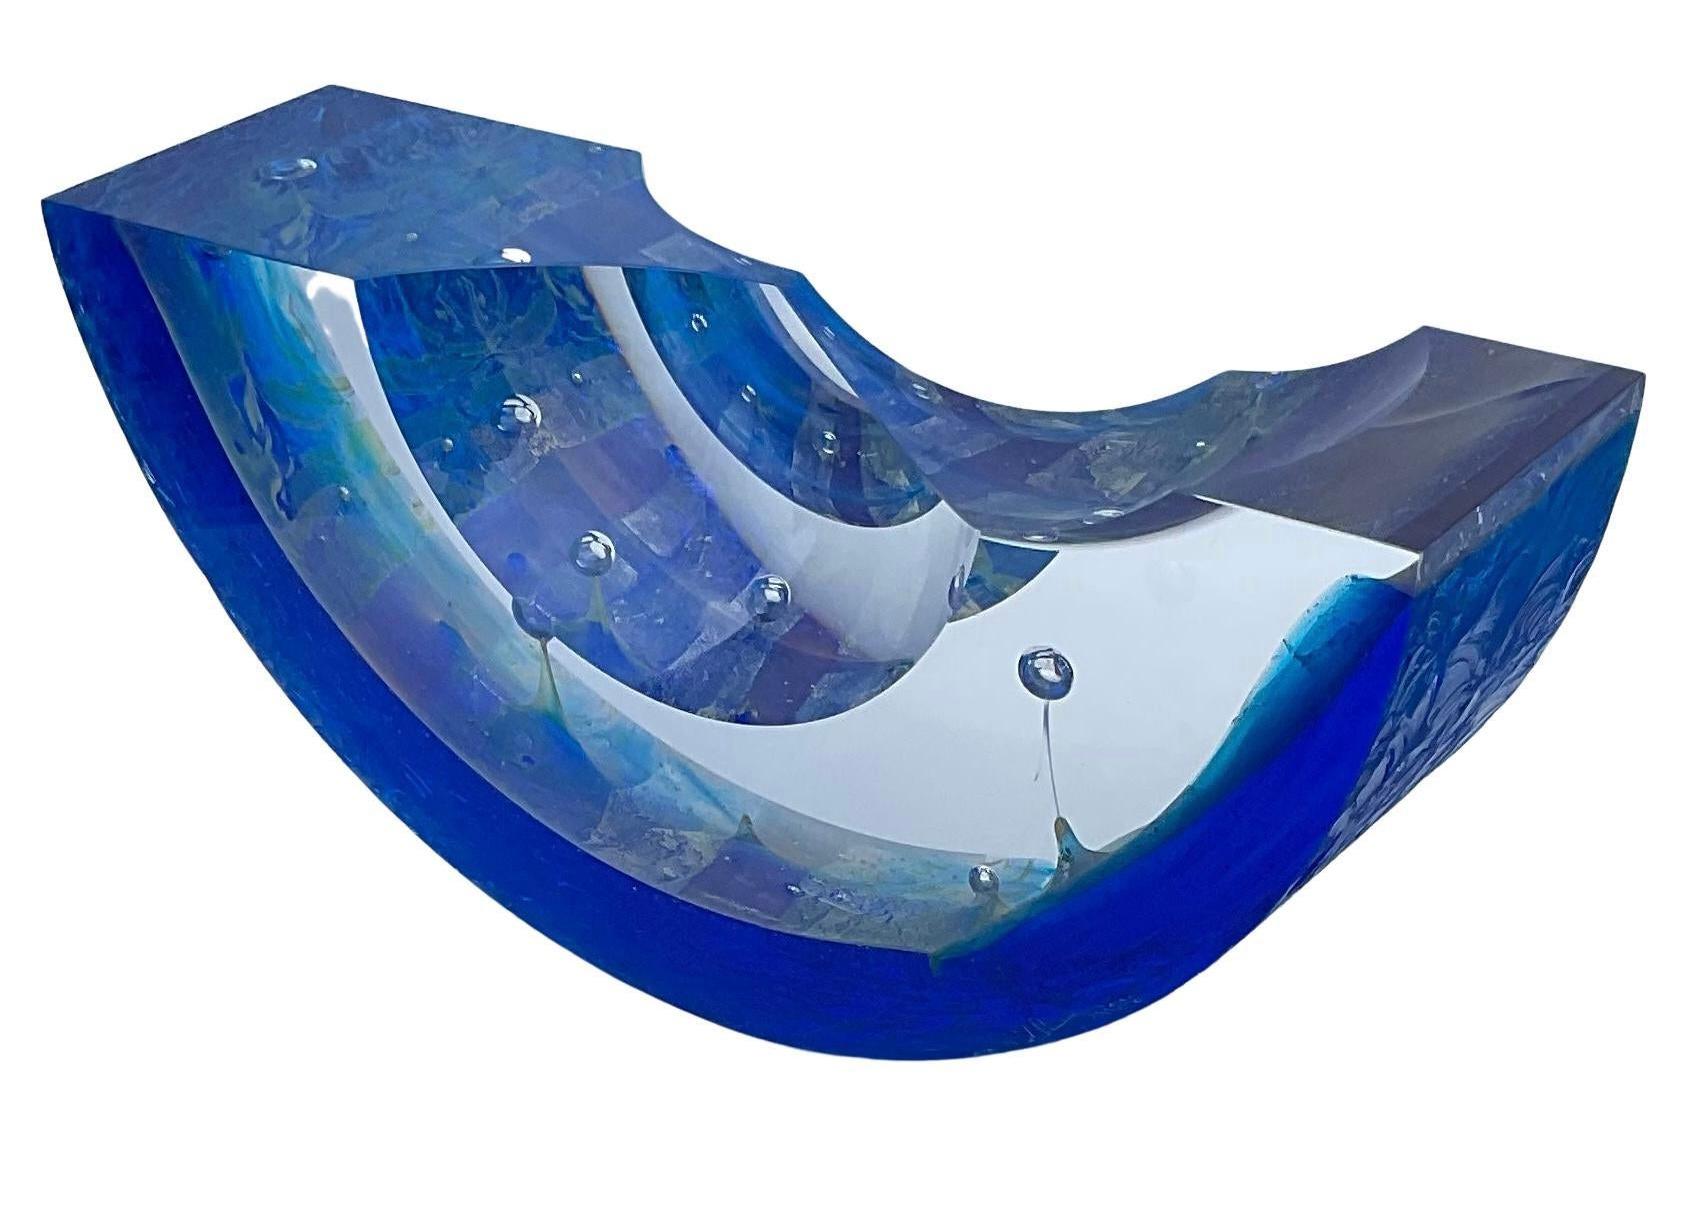 North American Steven Weinberg Studio Glass Abstract Regatta Boat Sculpture Artist Signed 